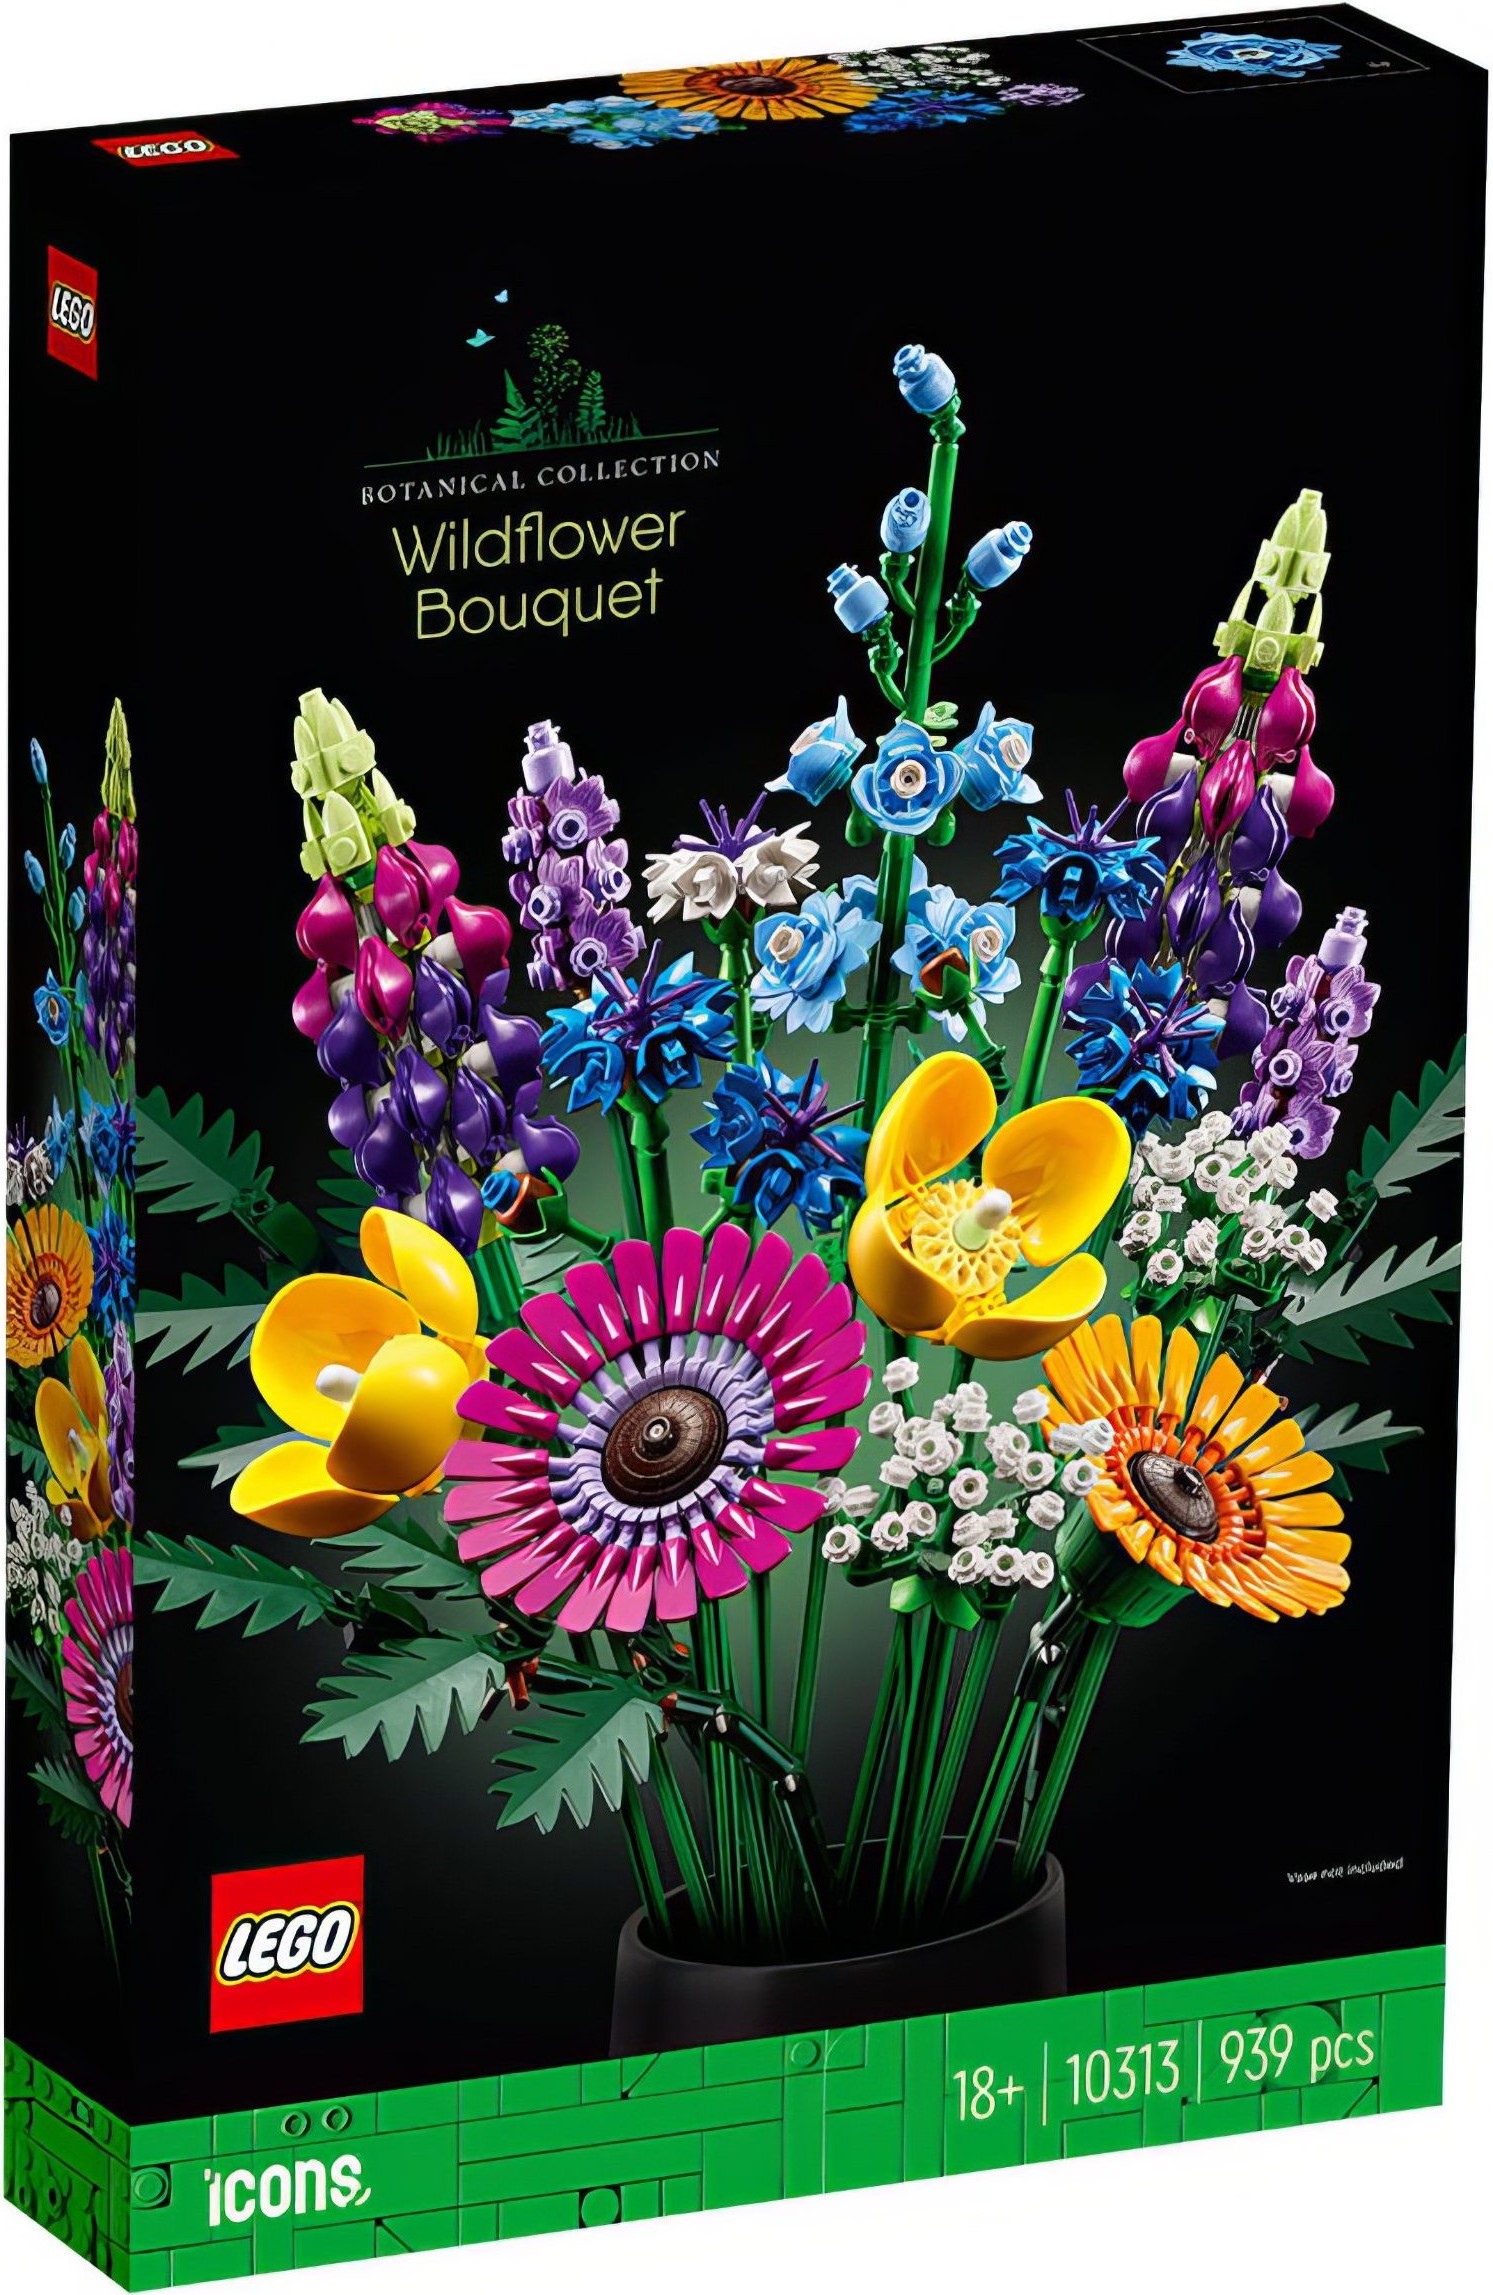 Beautiful Flower Floral Wildflower Decor Gifts 5 by Supra Ninja